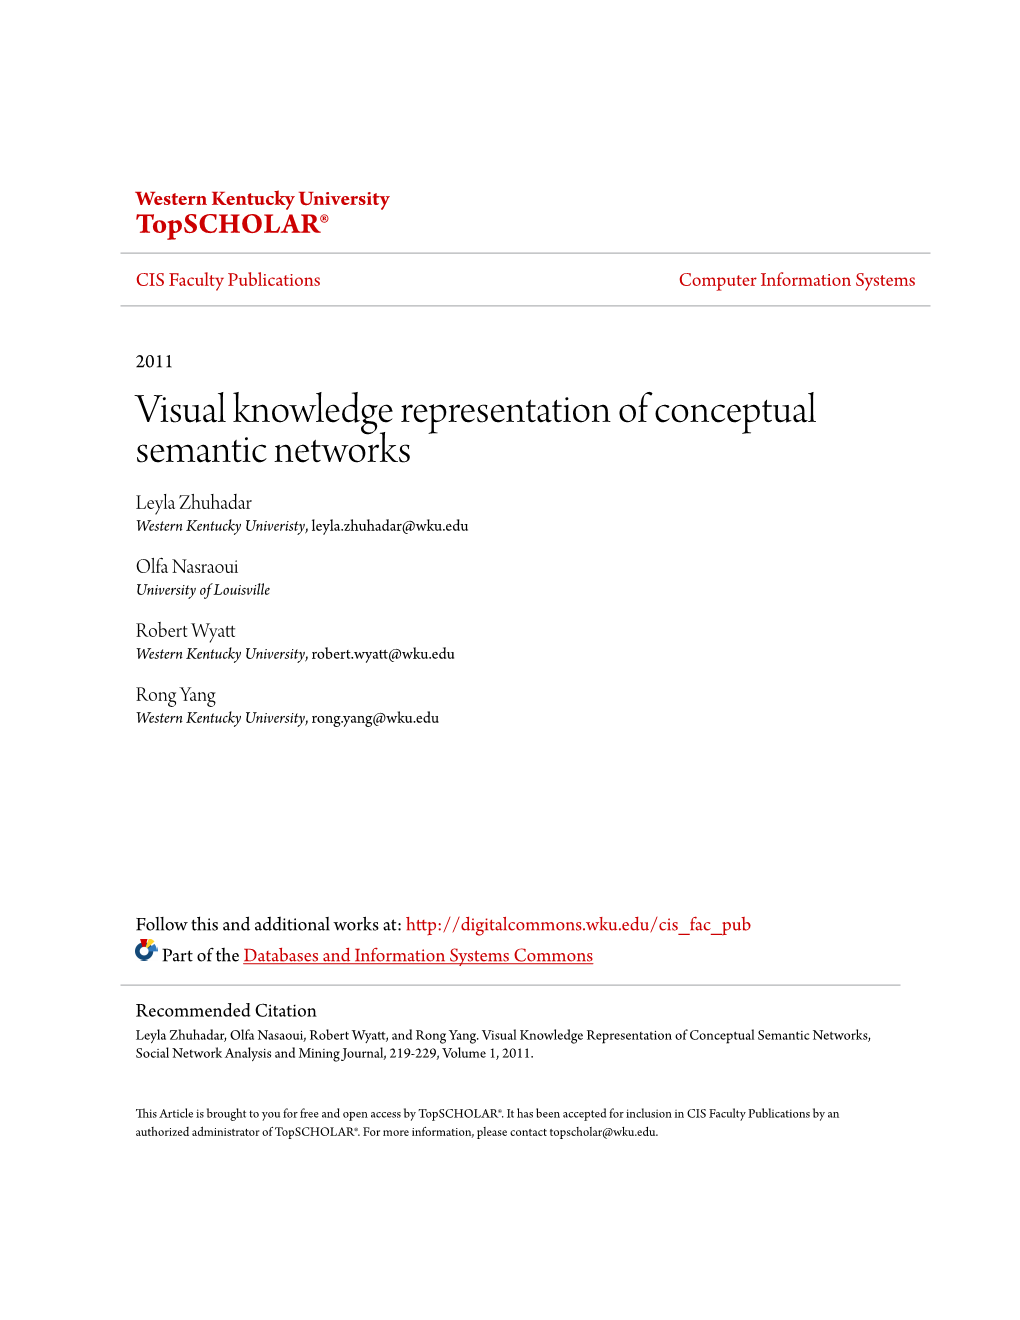 Visual Knowledge Representation of Conceptual Semantic Networks Leyla Zhuhadar Western Kentucky Univeristy, Leyla.Zhuhadar@Wku.Edu